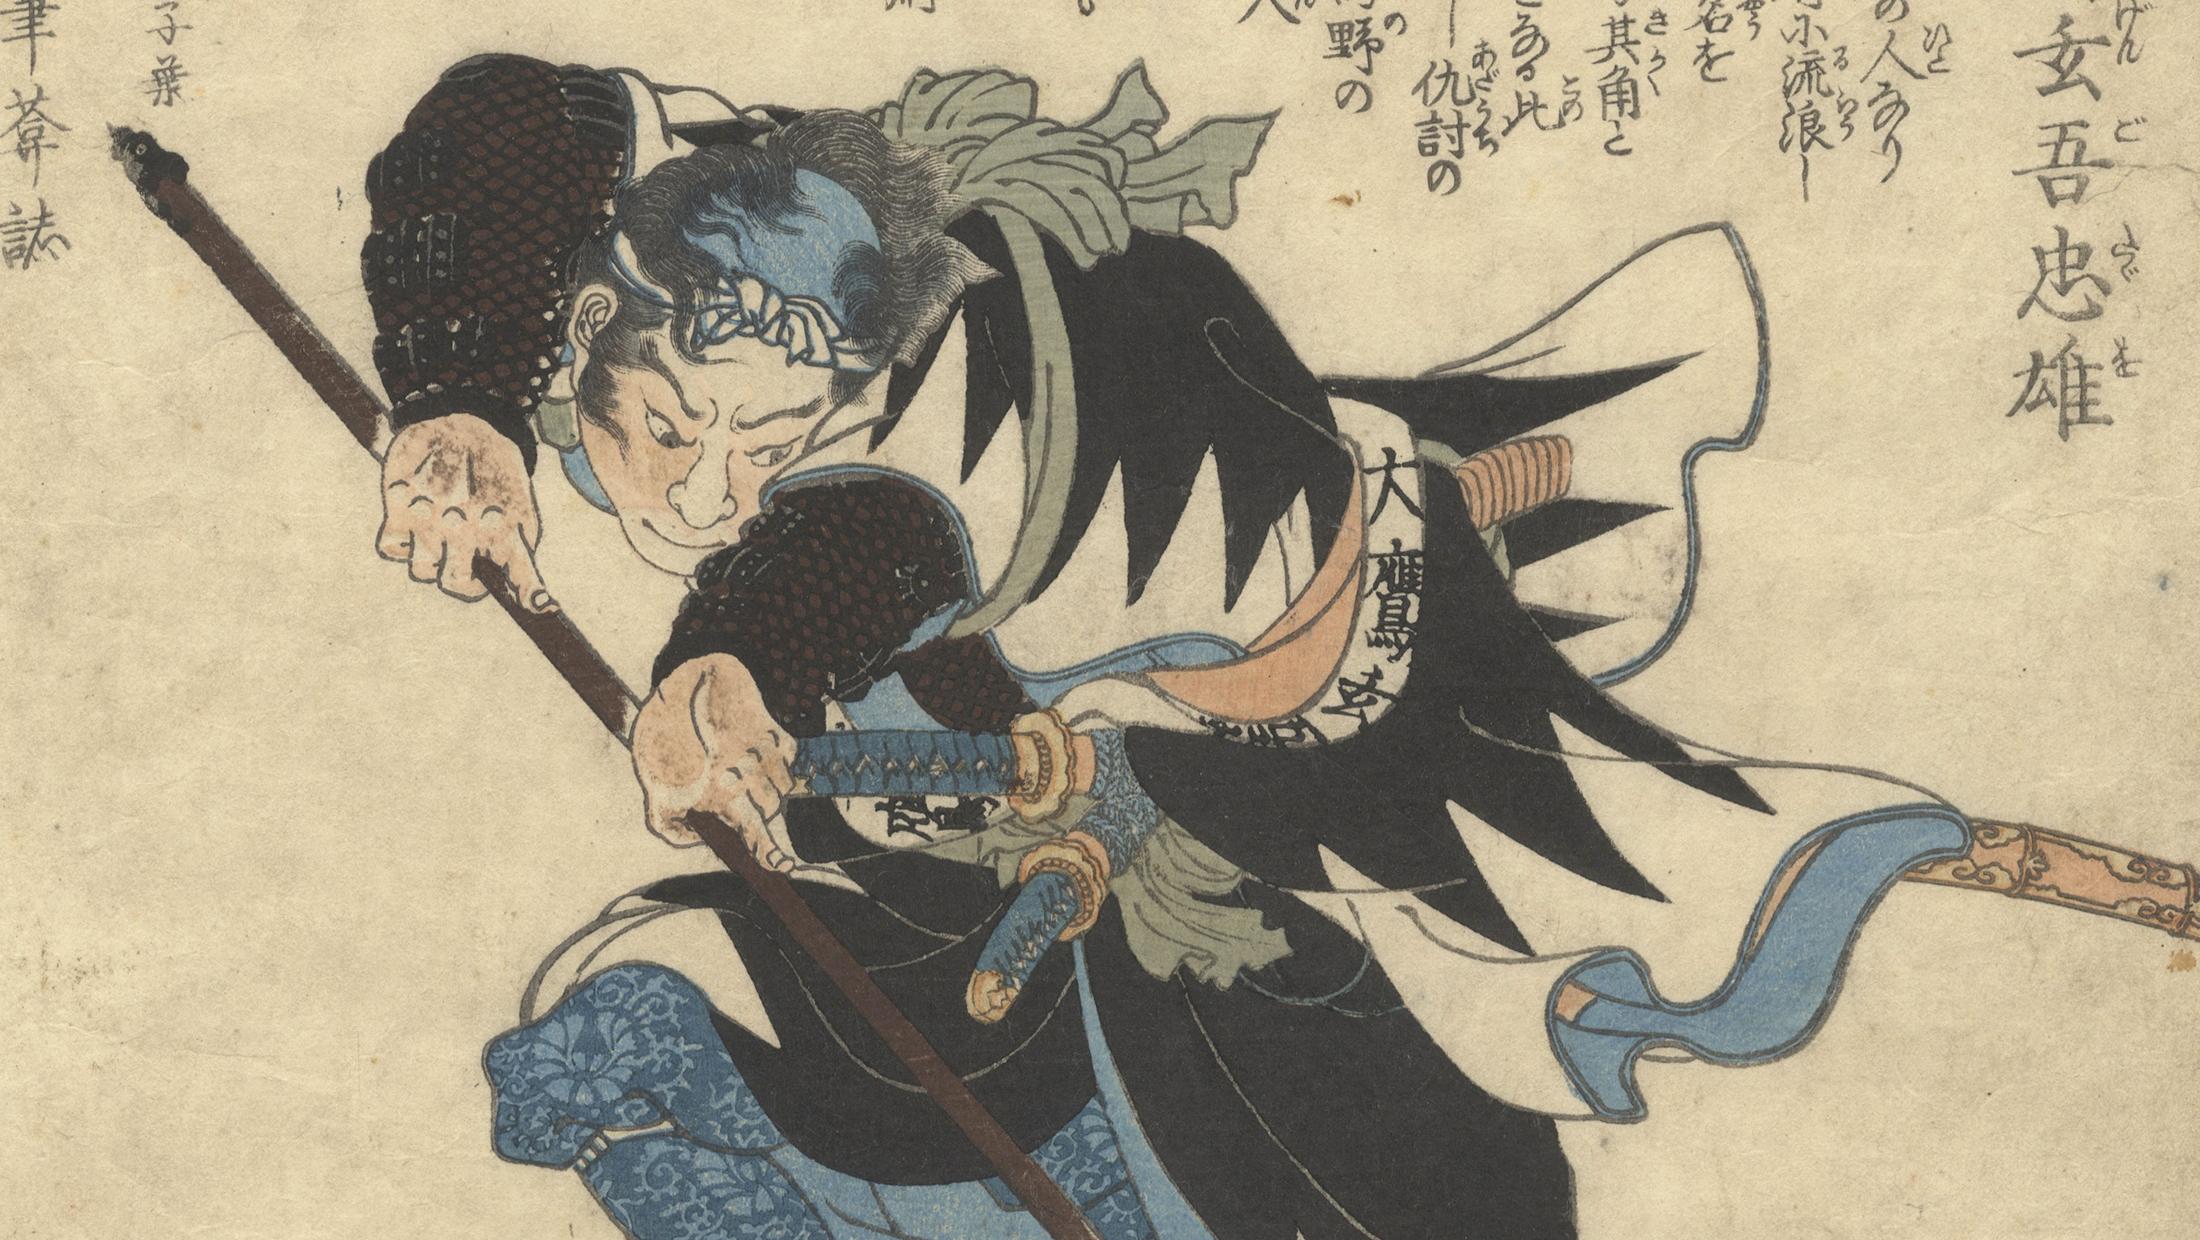 Artist: Kuniyoshi Utagawa (1798-1861)
Title: No 14. Otaka Gengo Tadao
Series: Stories of the True Loyalty of the Faithful Samurai 
Publisher: Ebiya Rinnosuke
Date: c. 1850
Dimensions: 24.7 x 35.7 cm

It has the power
to bend trees and fold mountains